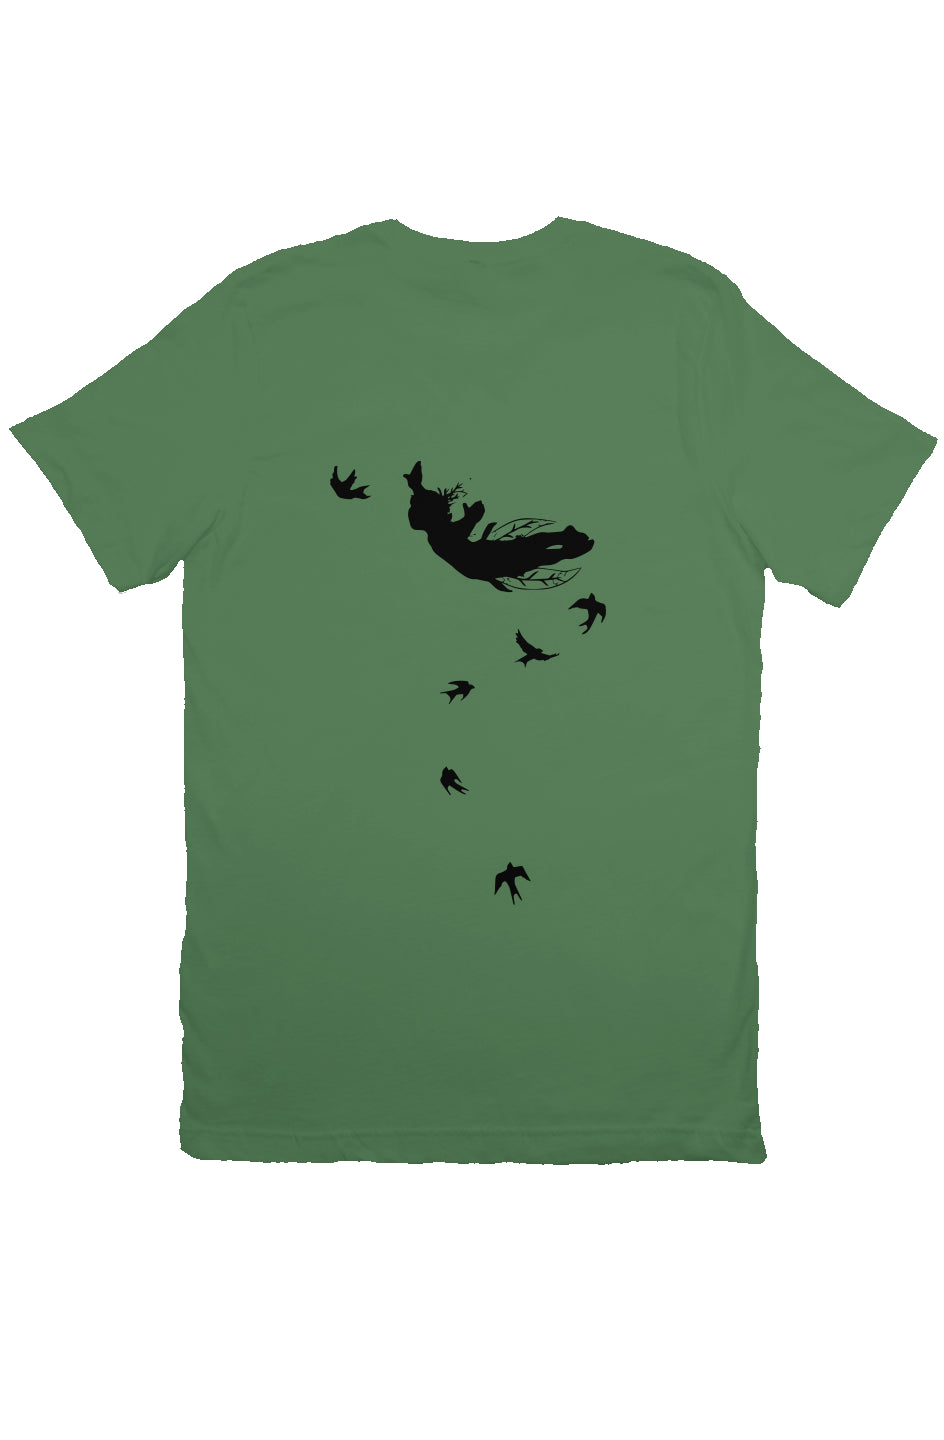 Peter Pan Unisex Adult T-shirt leaf